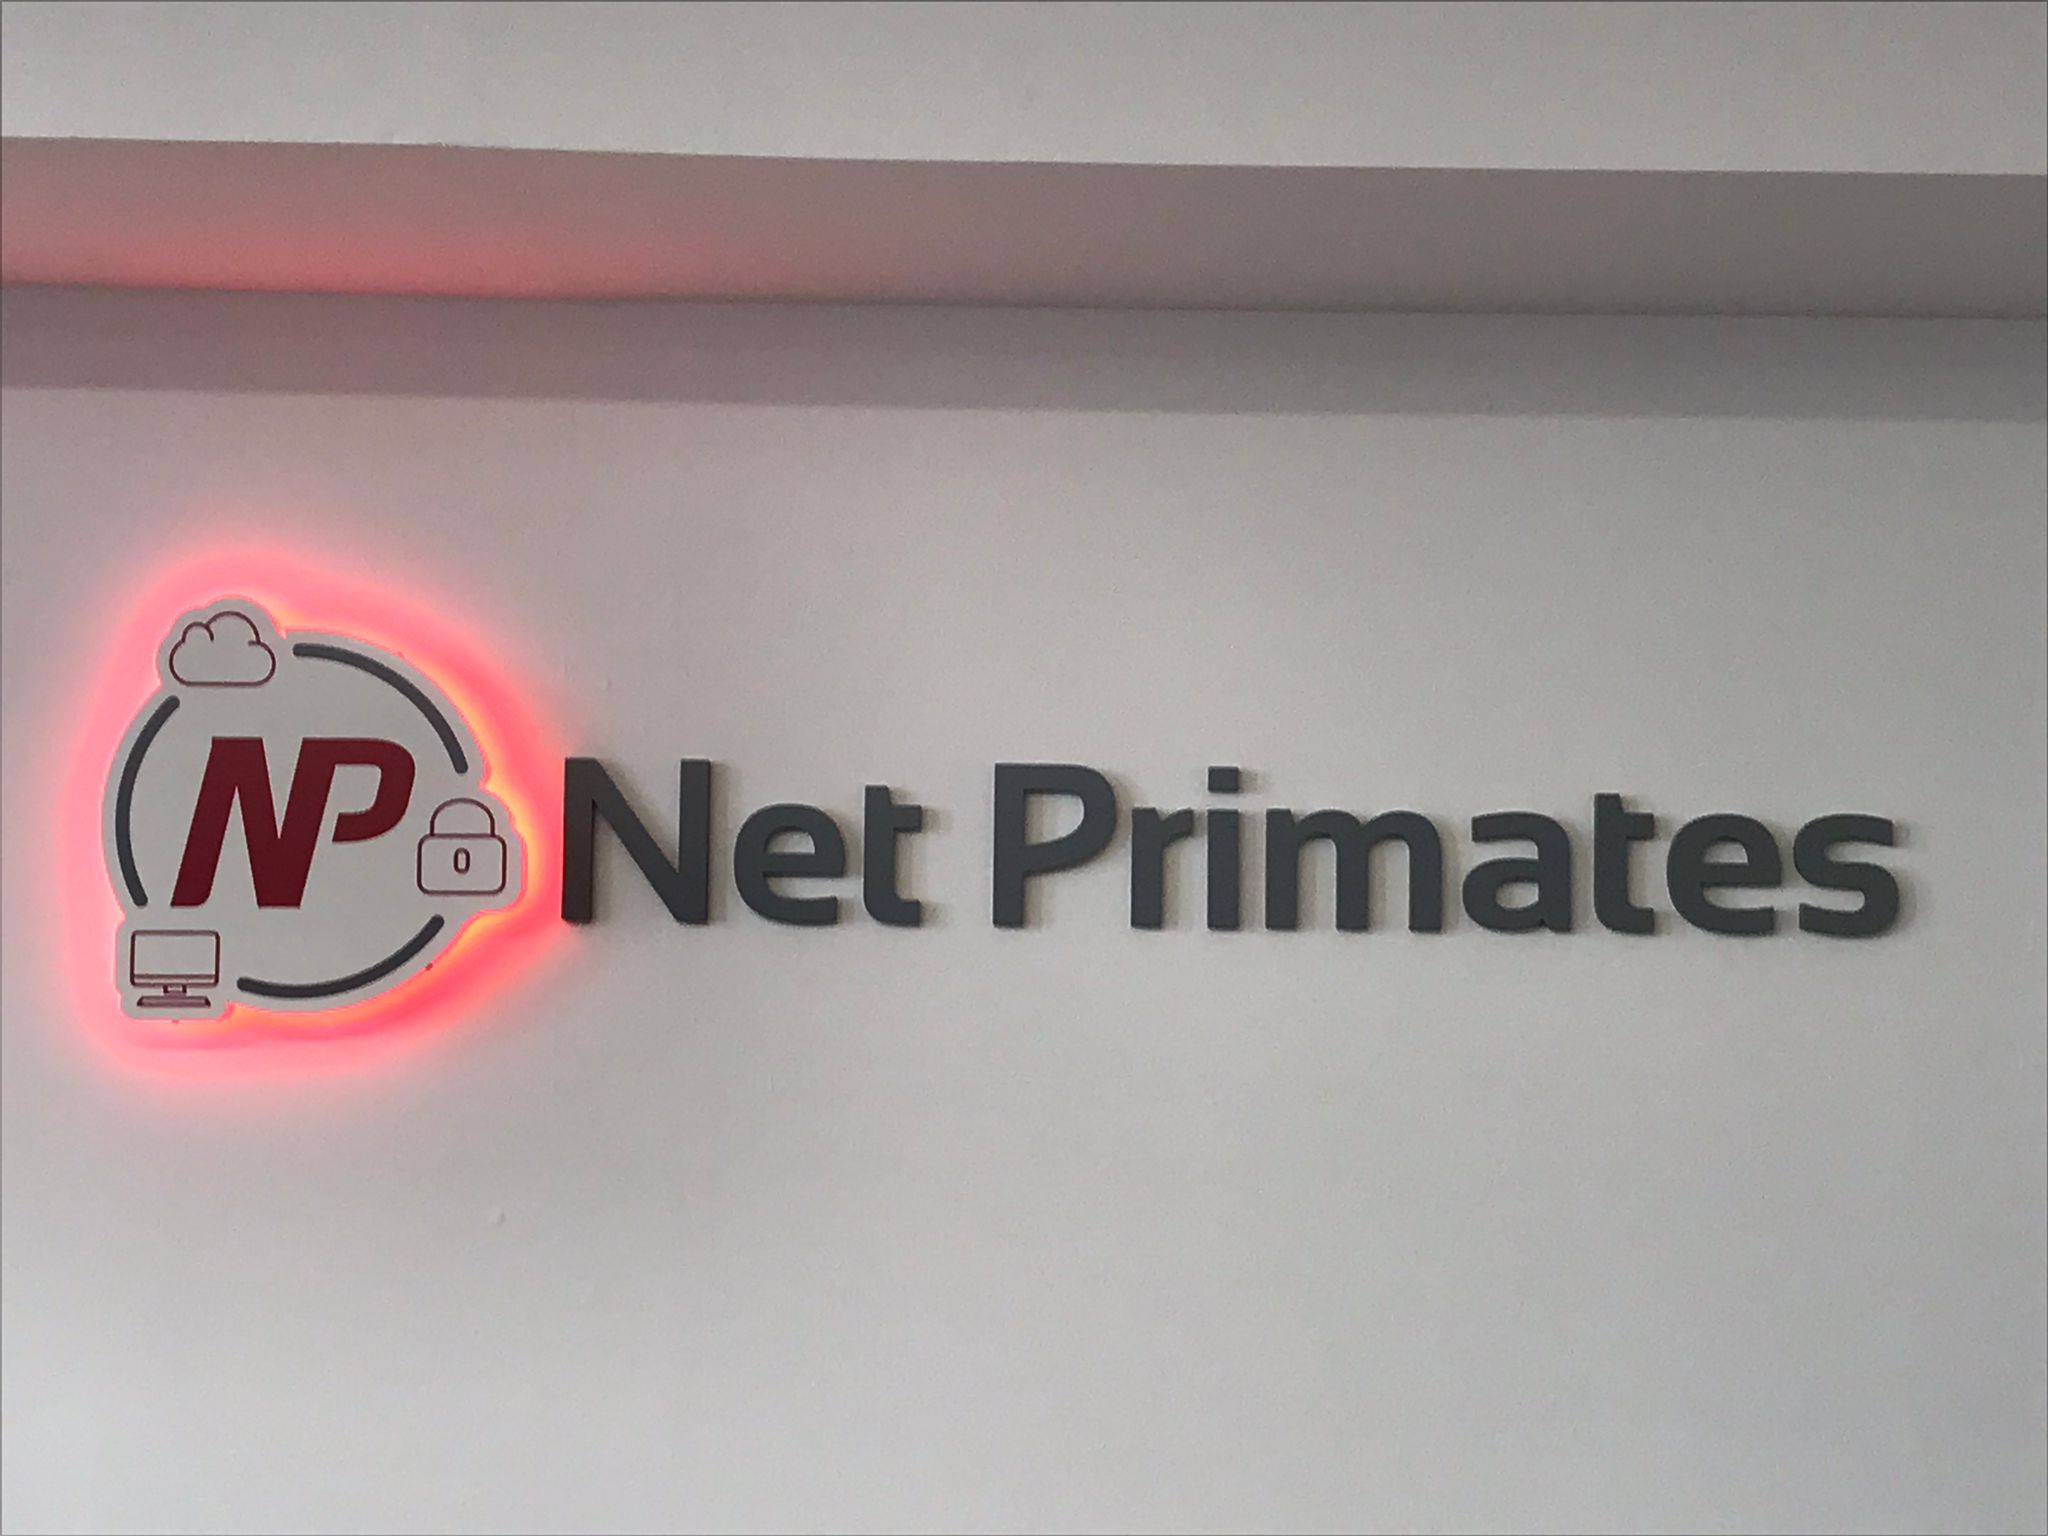 Net Primates logo LED sign.